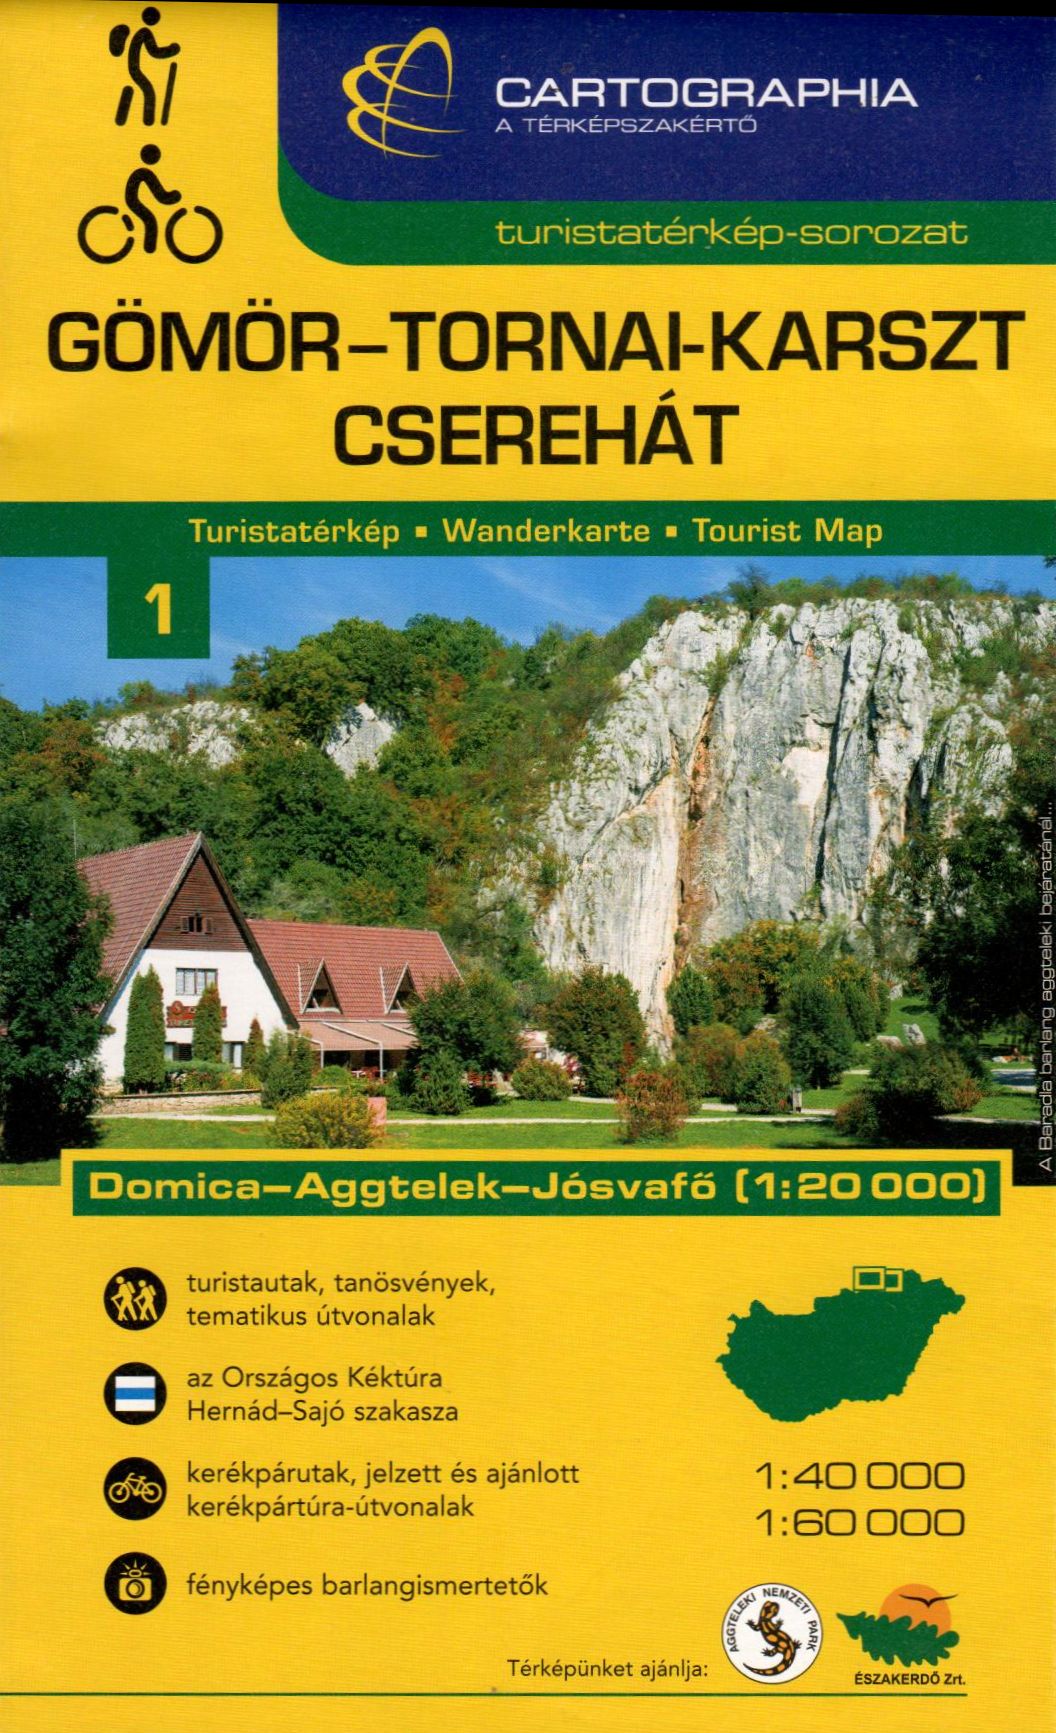  Cserehát (area between Hernád and Sajó rivers) tourist biking map is  an inset map on the Gömör-Torna (Aggtelek) karst map